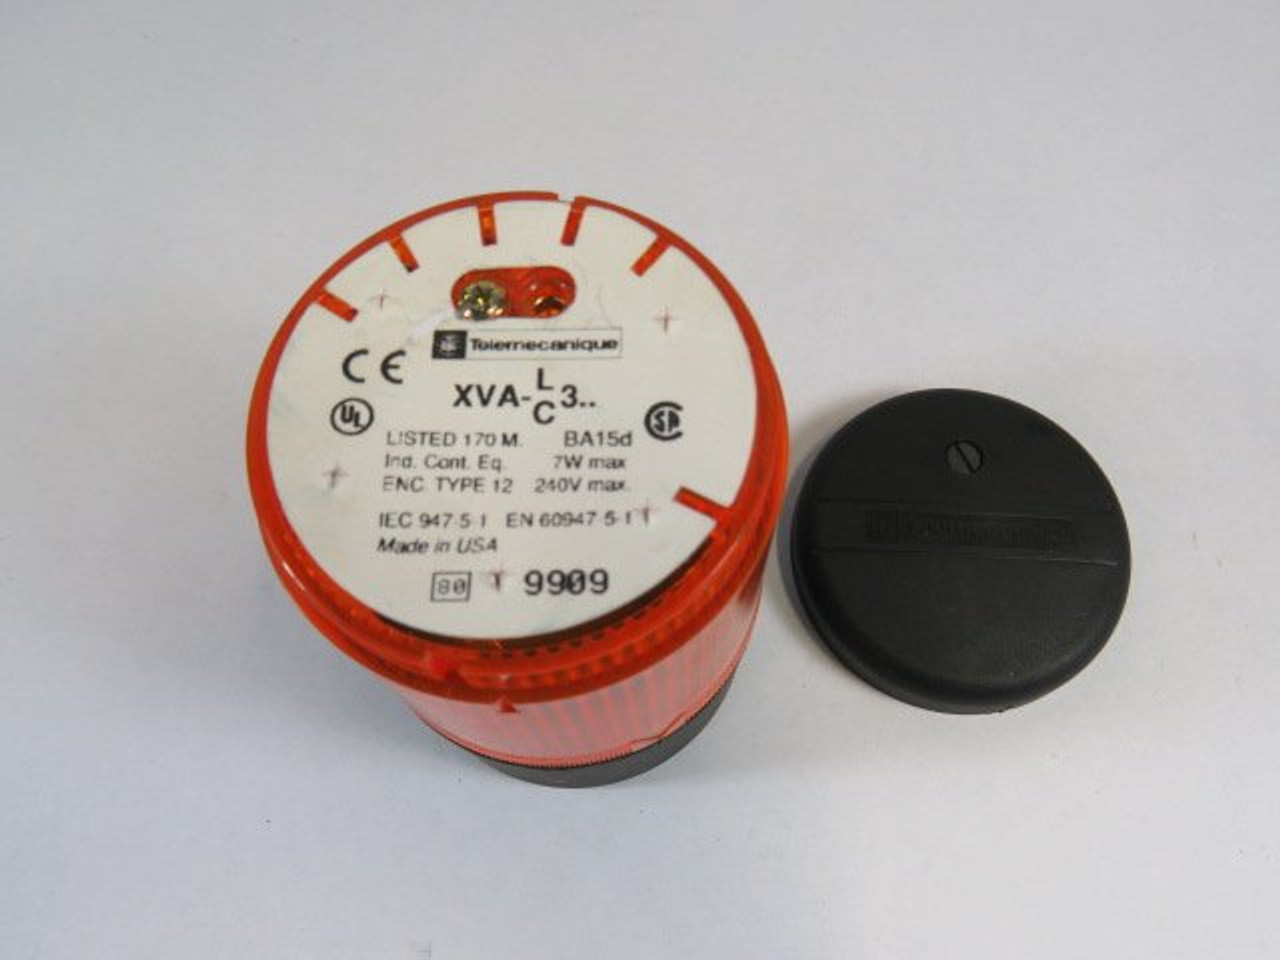 Telemecanique XVA-L351 Orange Stack Light w/ Cap & Base 240V 7W No Bulb USED